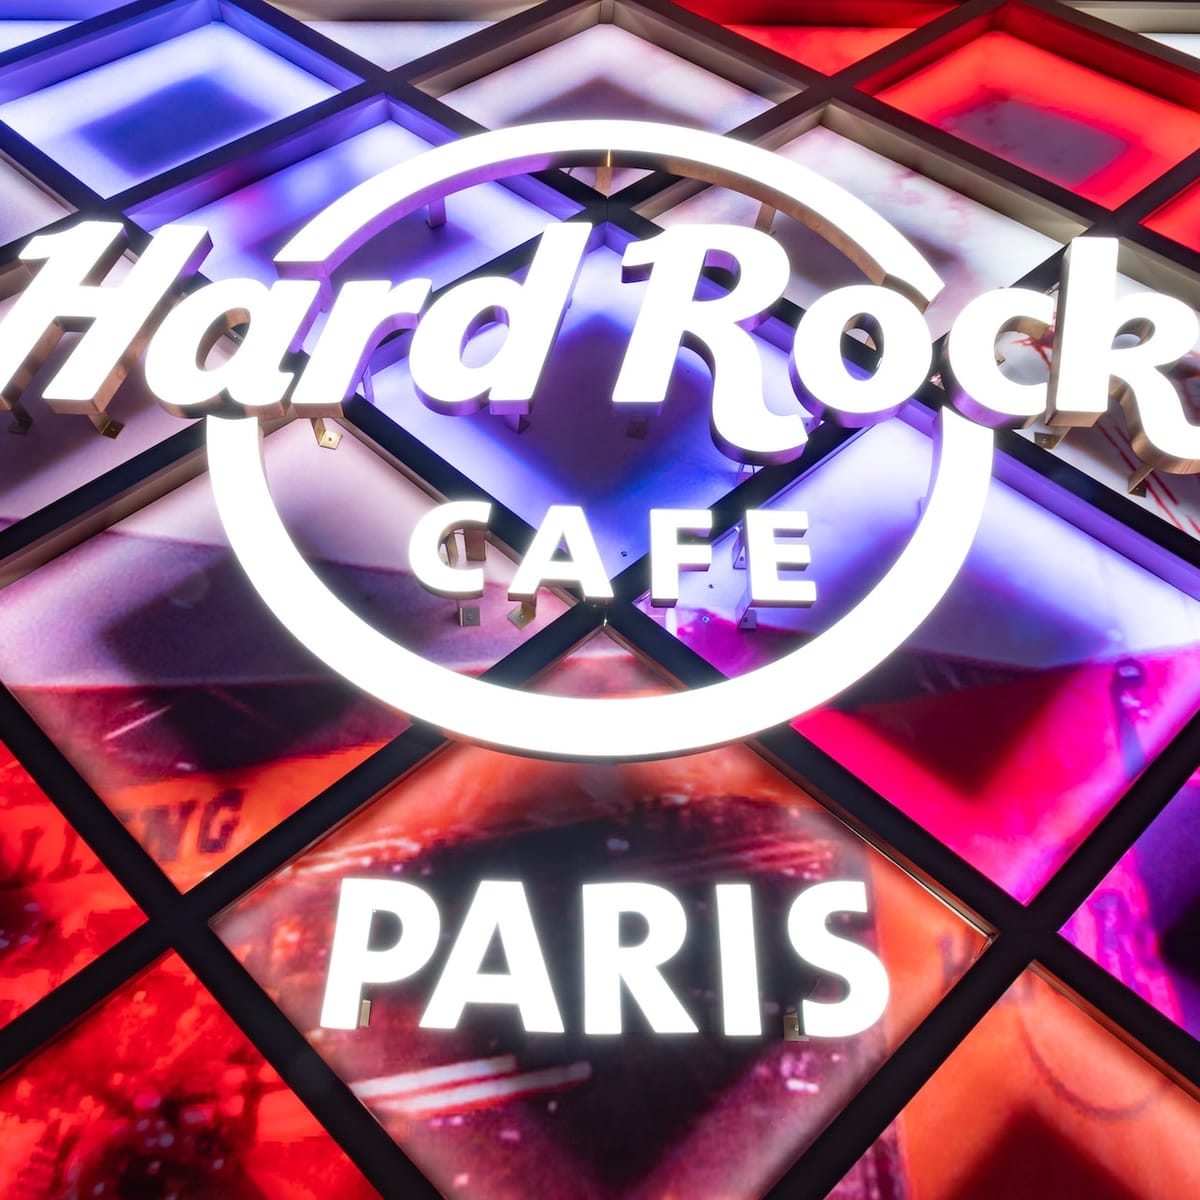 hard-rock-cafe-paris-skip-the-line-ticket_1